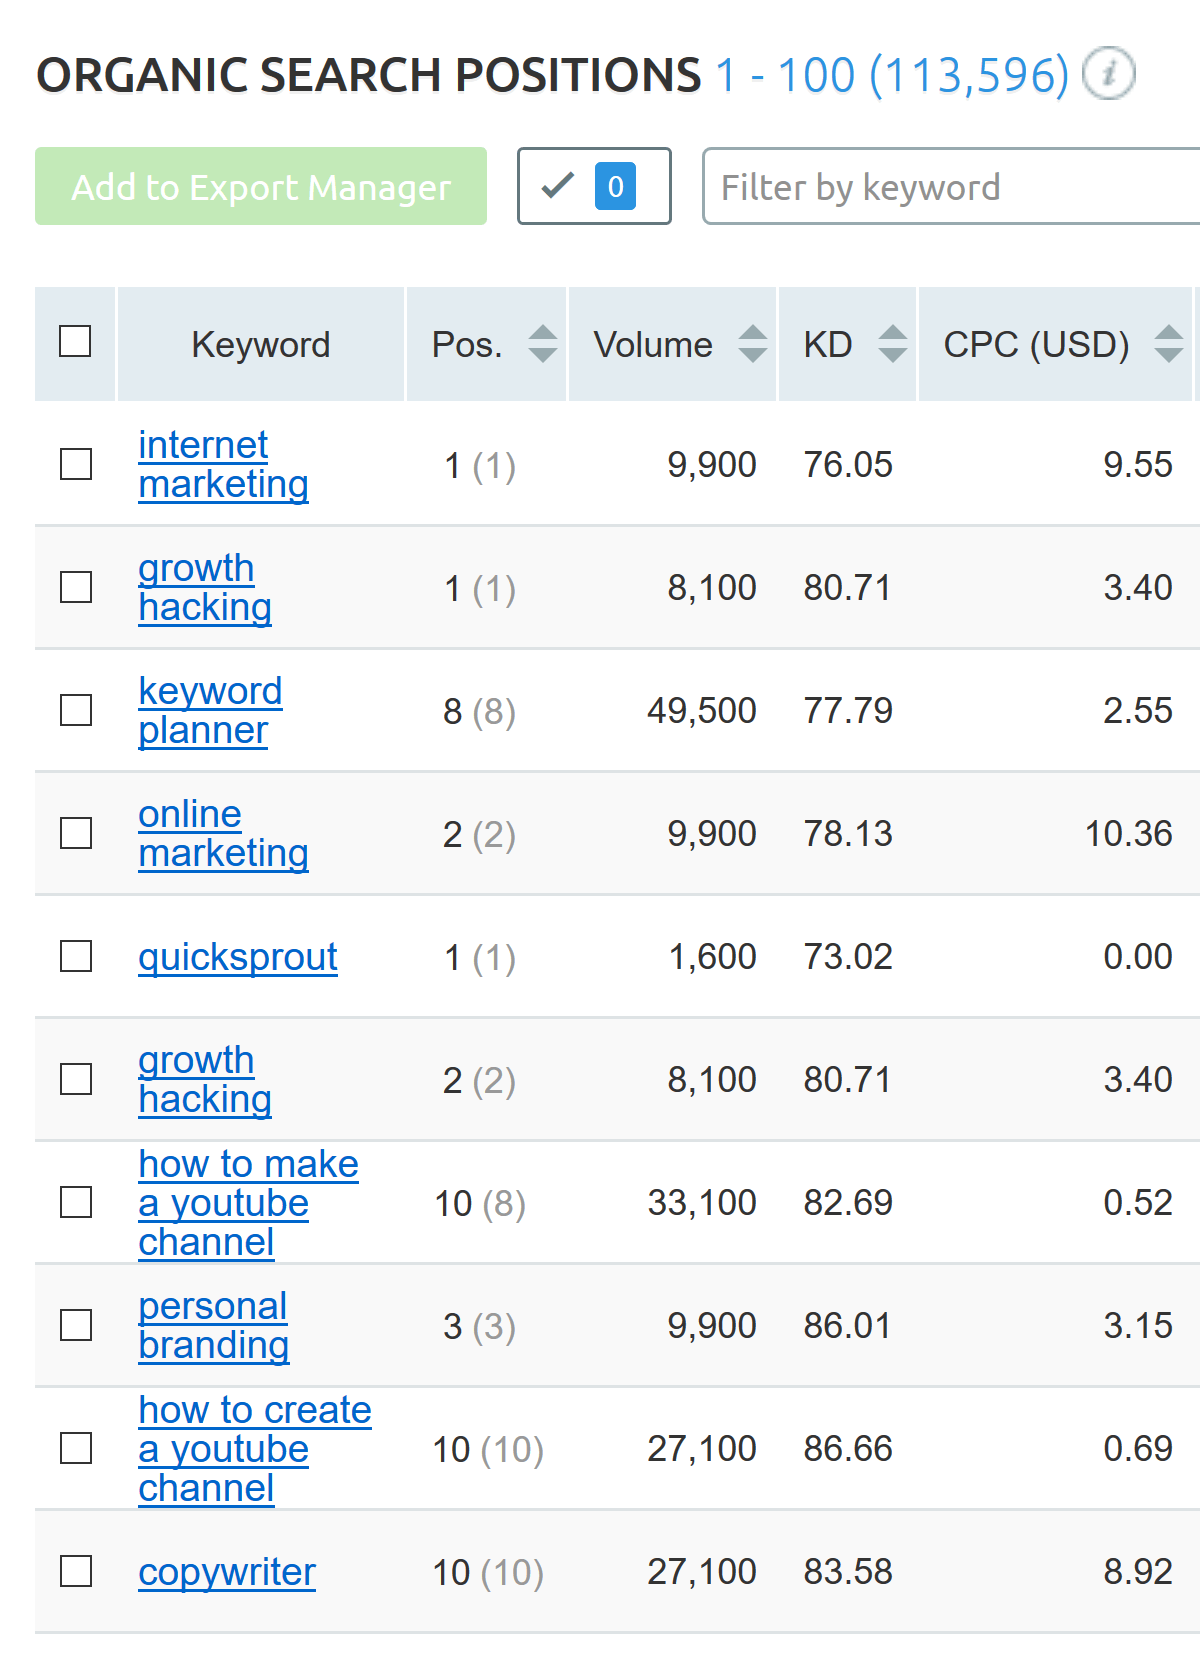 keyword rankings